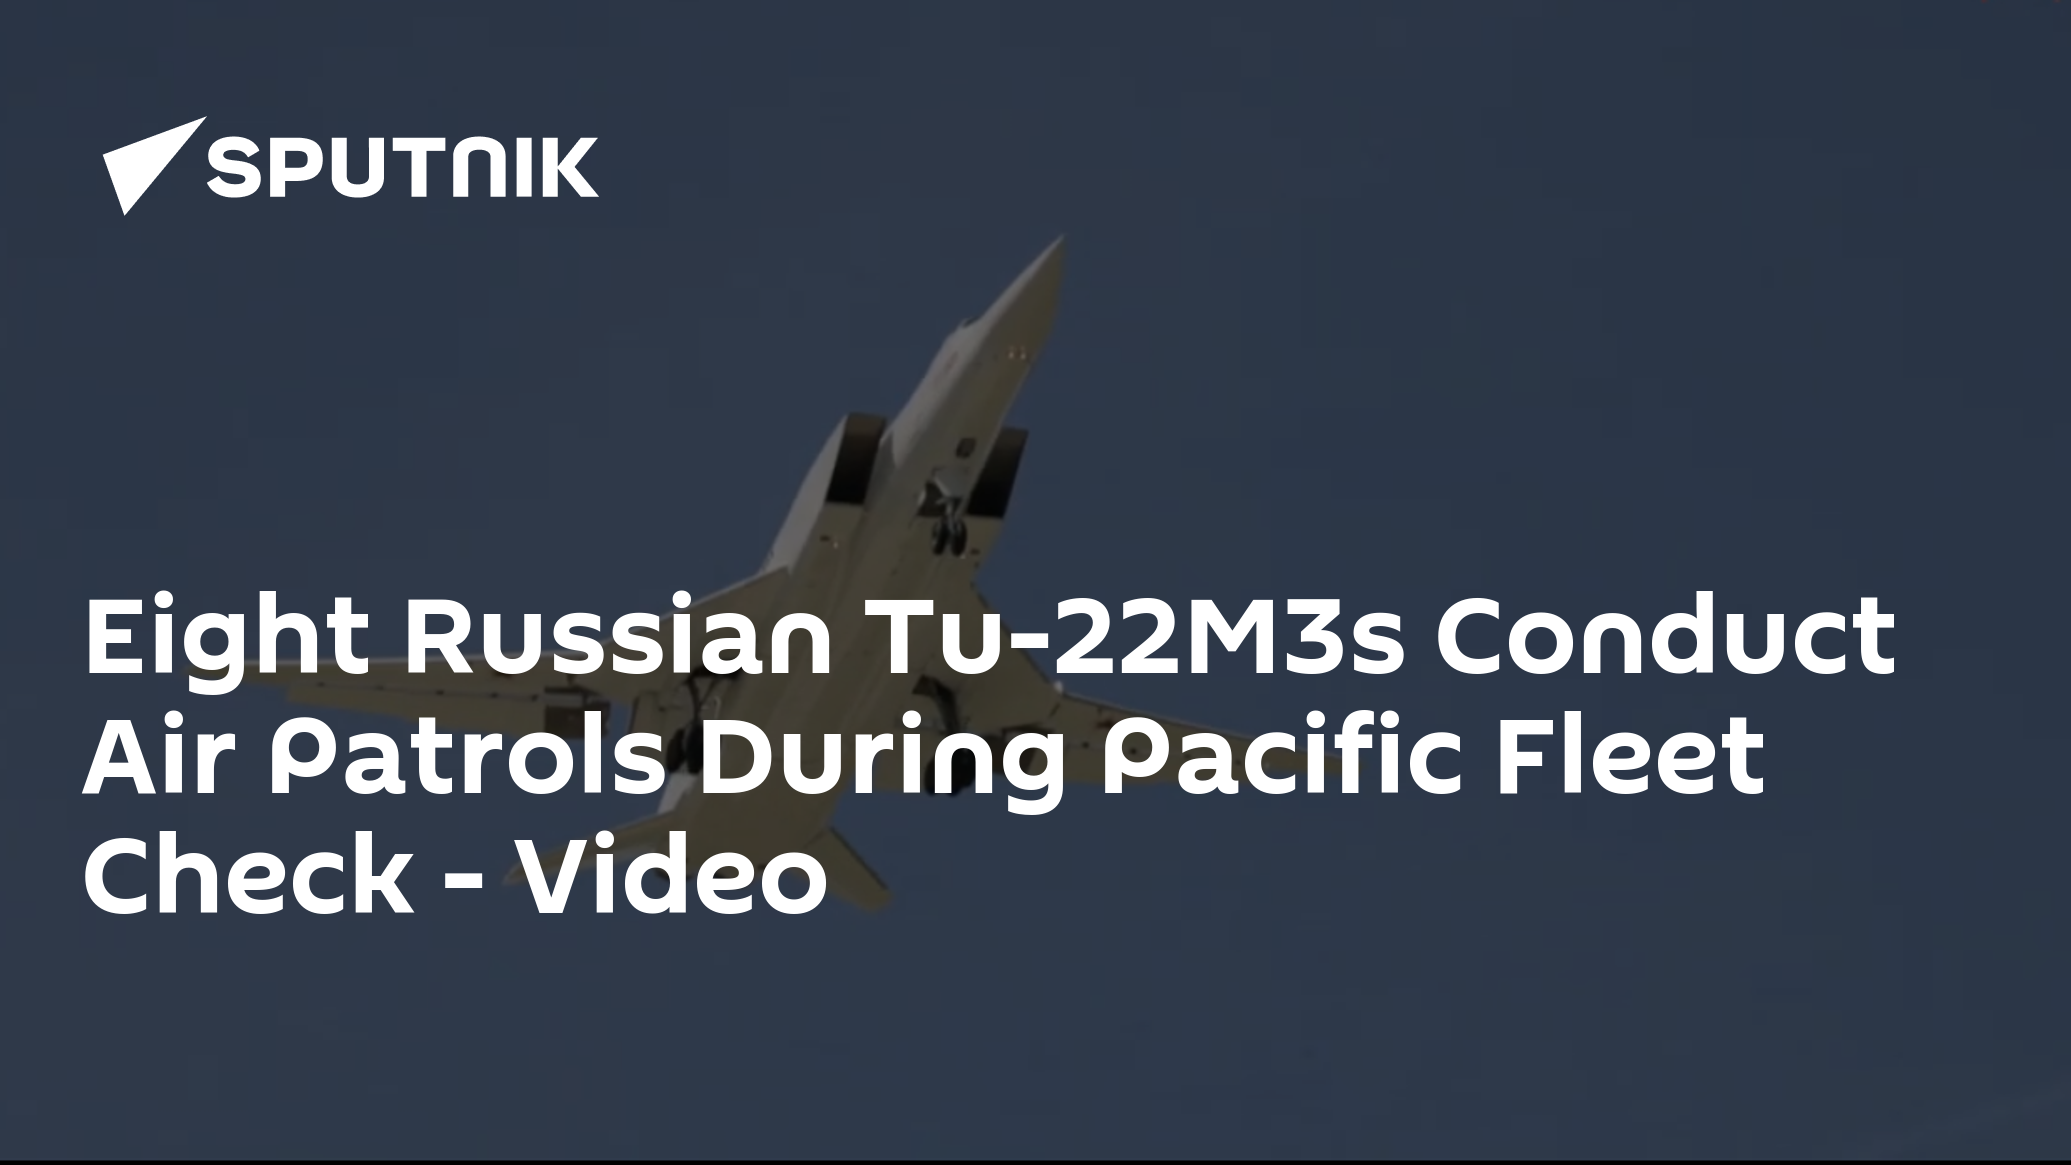 Eight Russian Tu-22M3 Bombers Conduct Air Patrols During Pacific Fleet Check